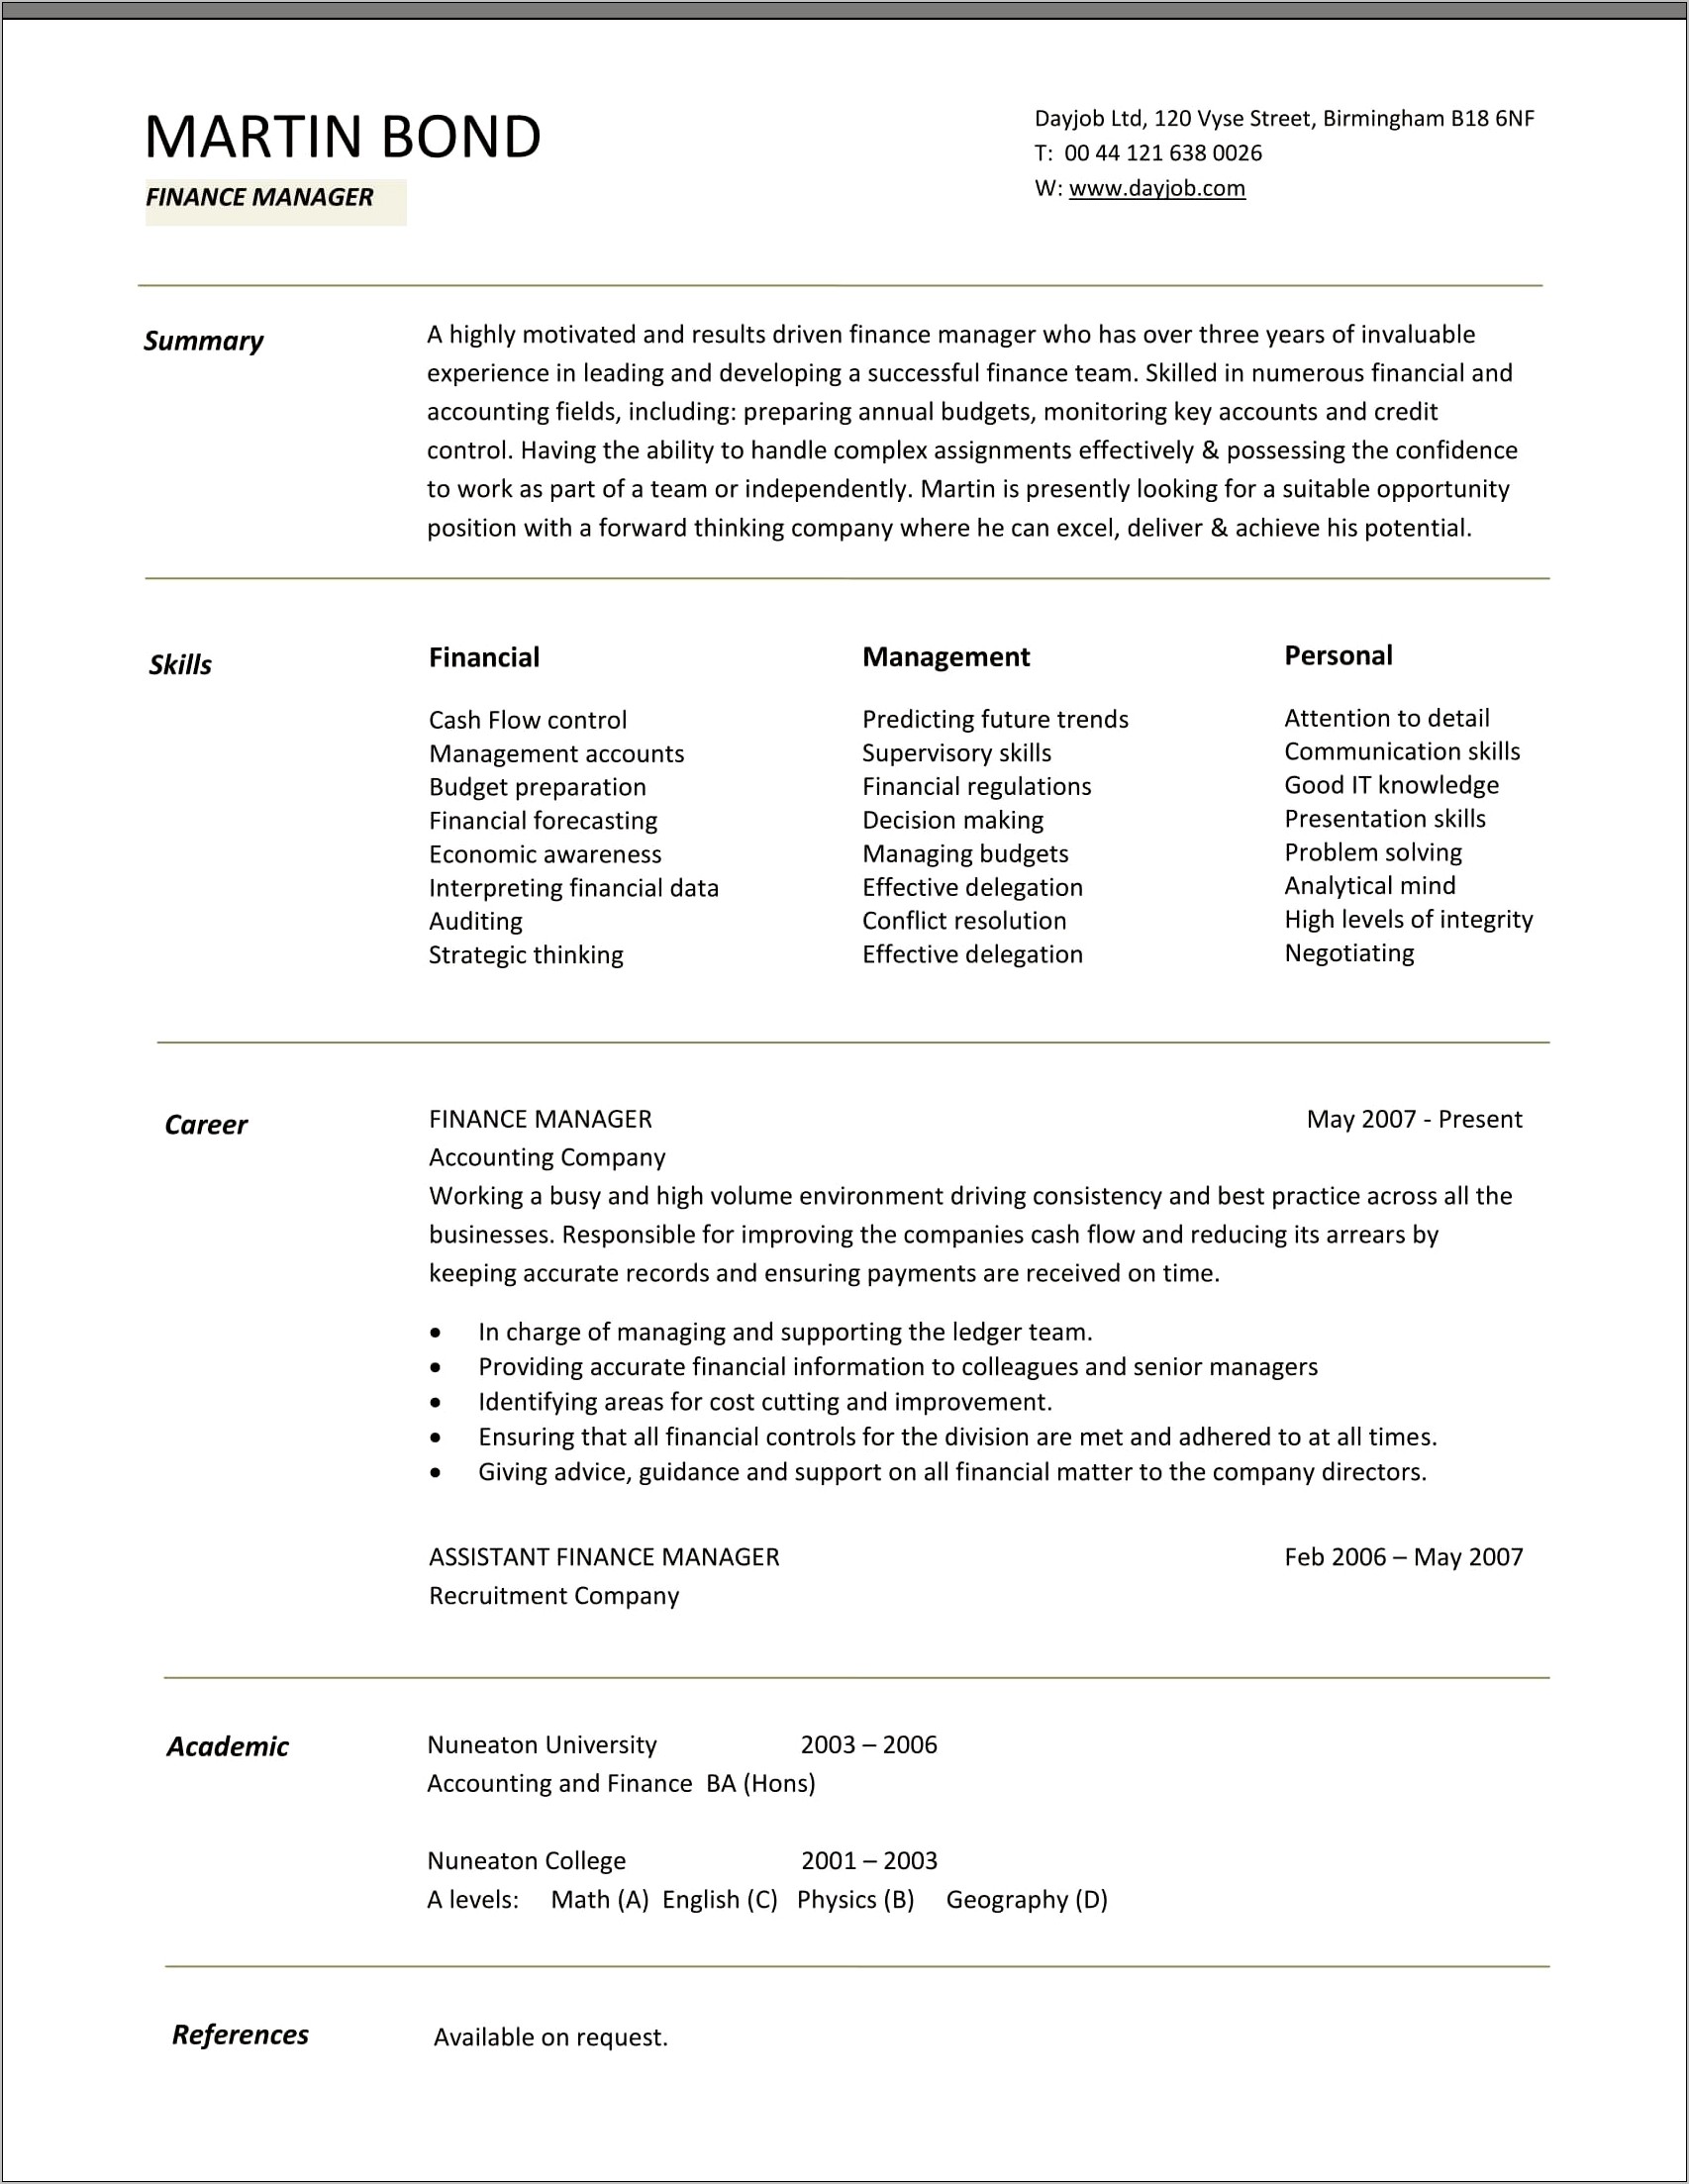 Resume Format For Finance Manager